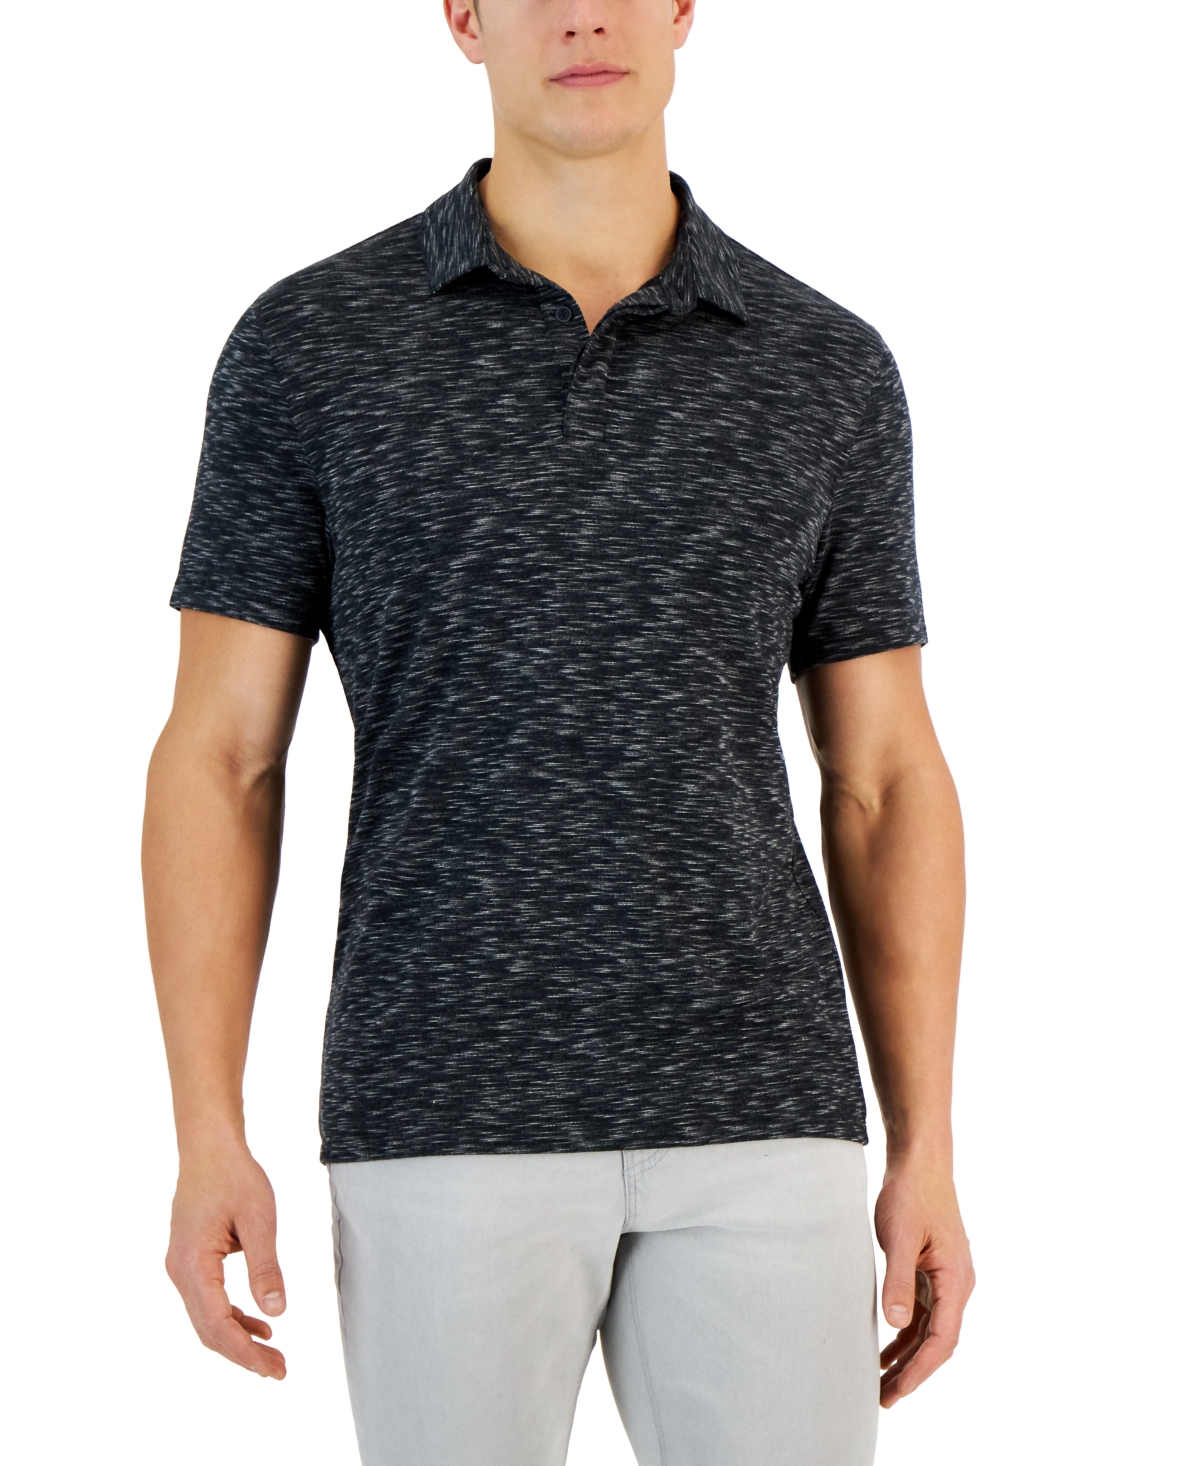 Alfatech Short Sleeve Marled Polo Shirt, Created for Macy's - Deep Black